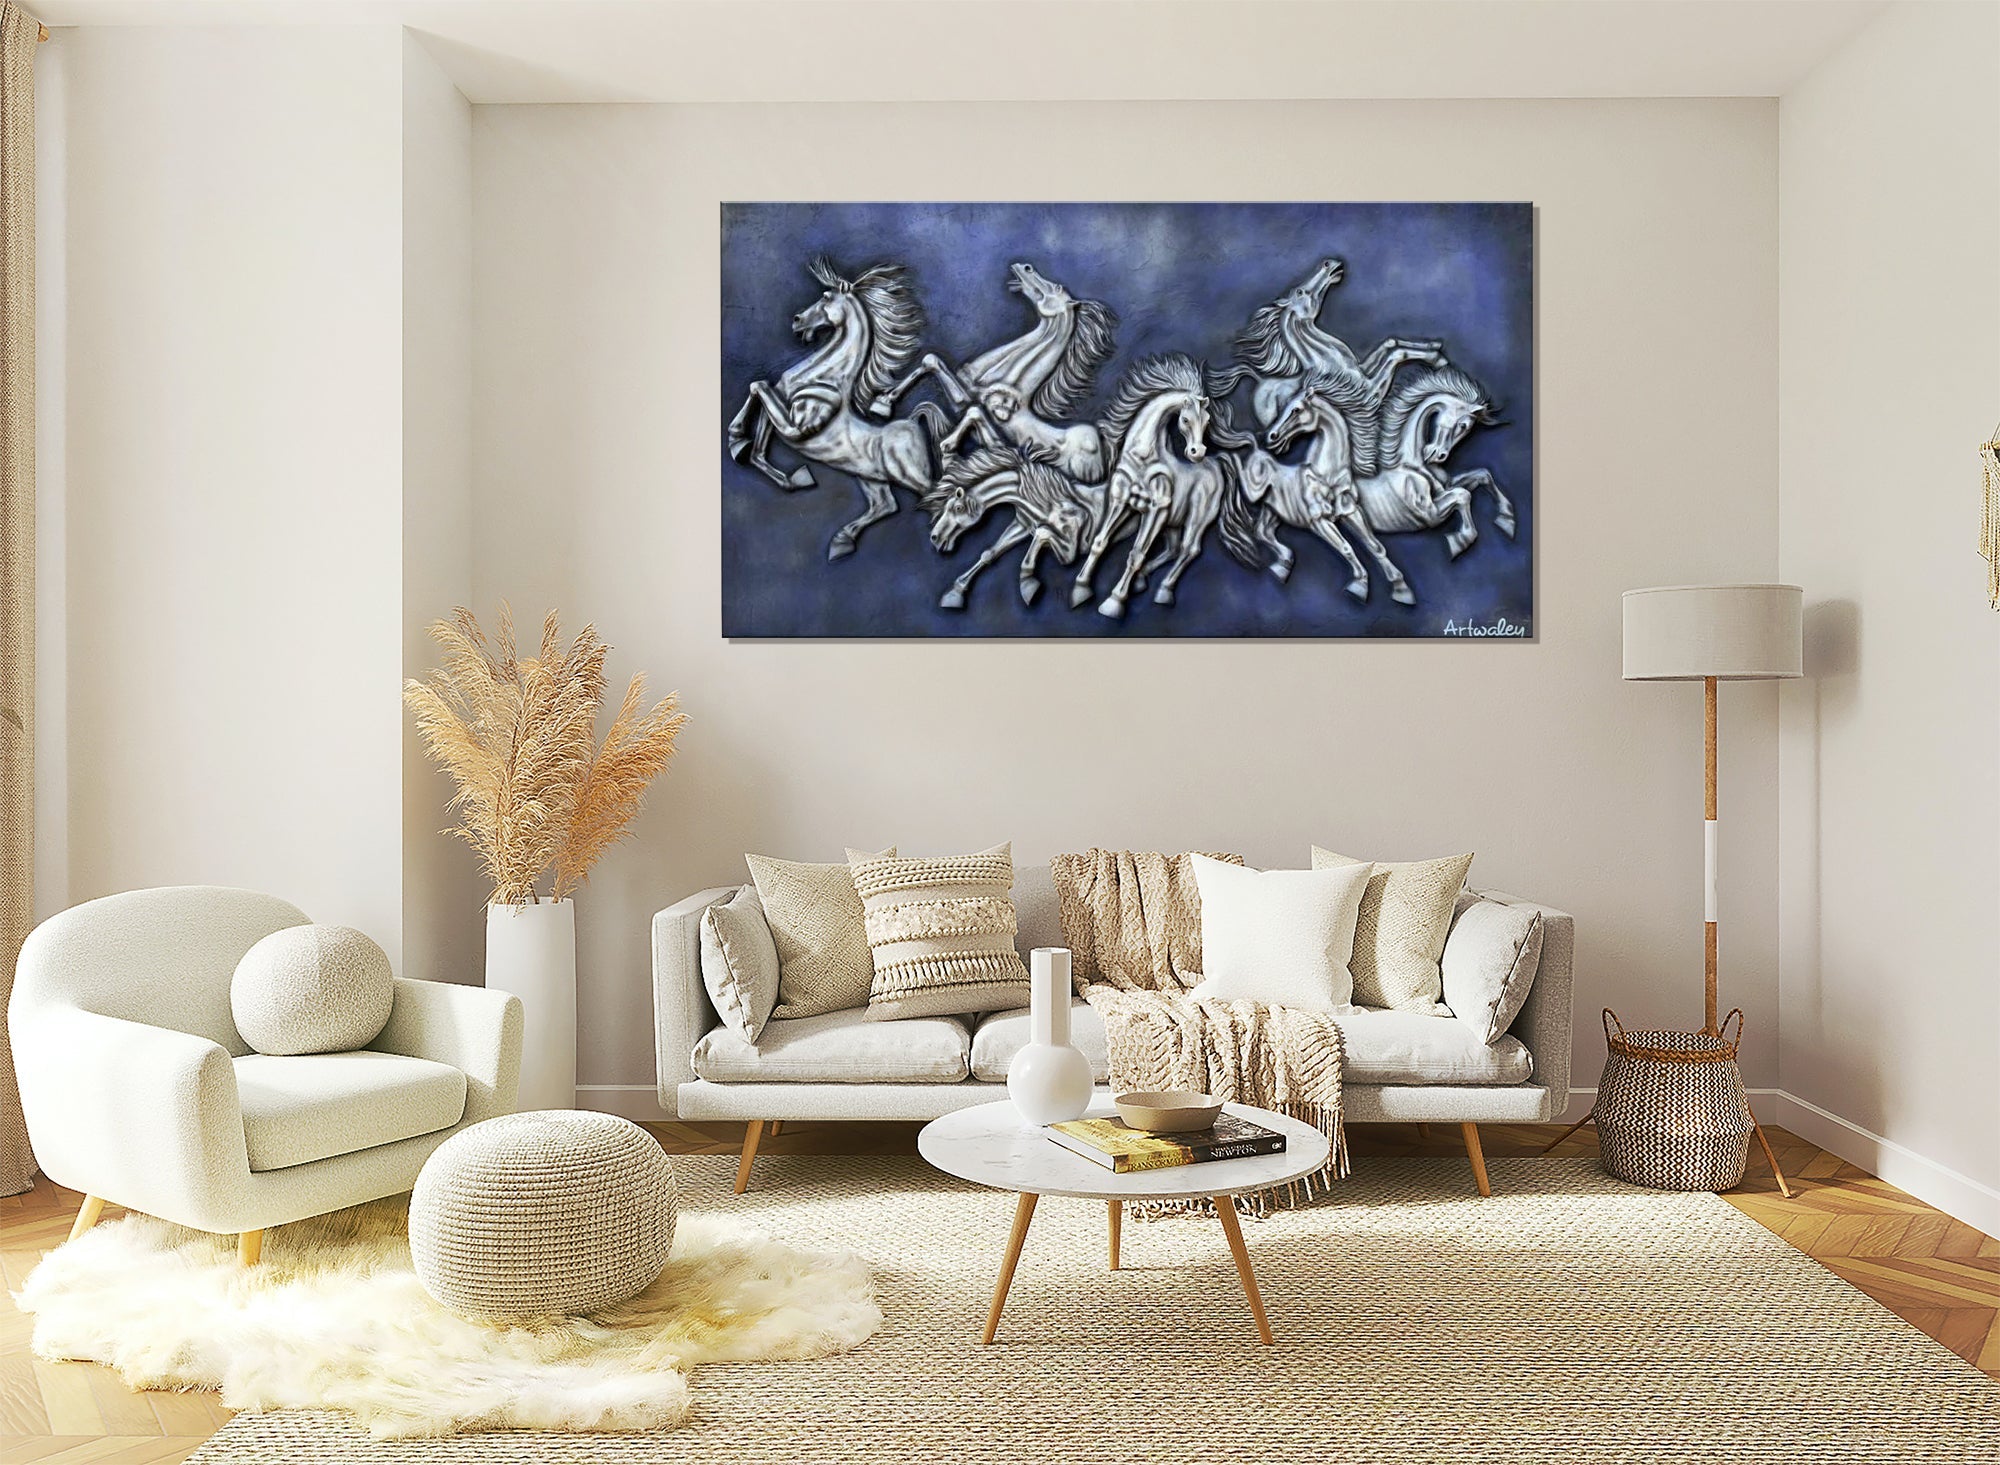 7 Horses Blue - Mural